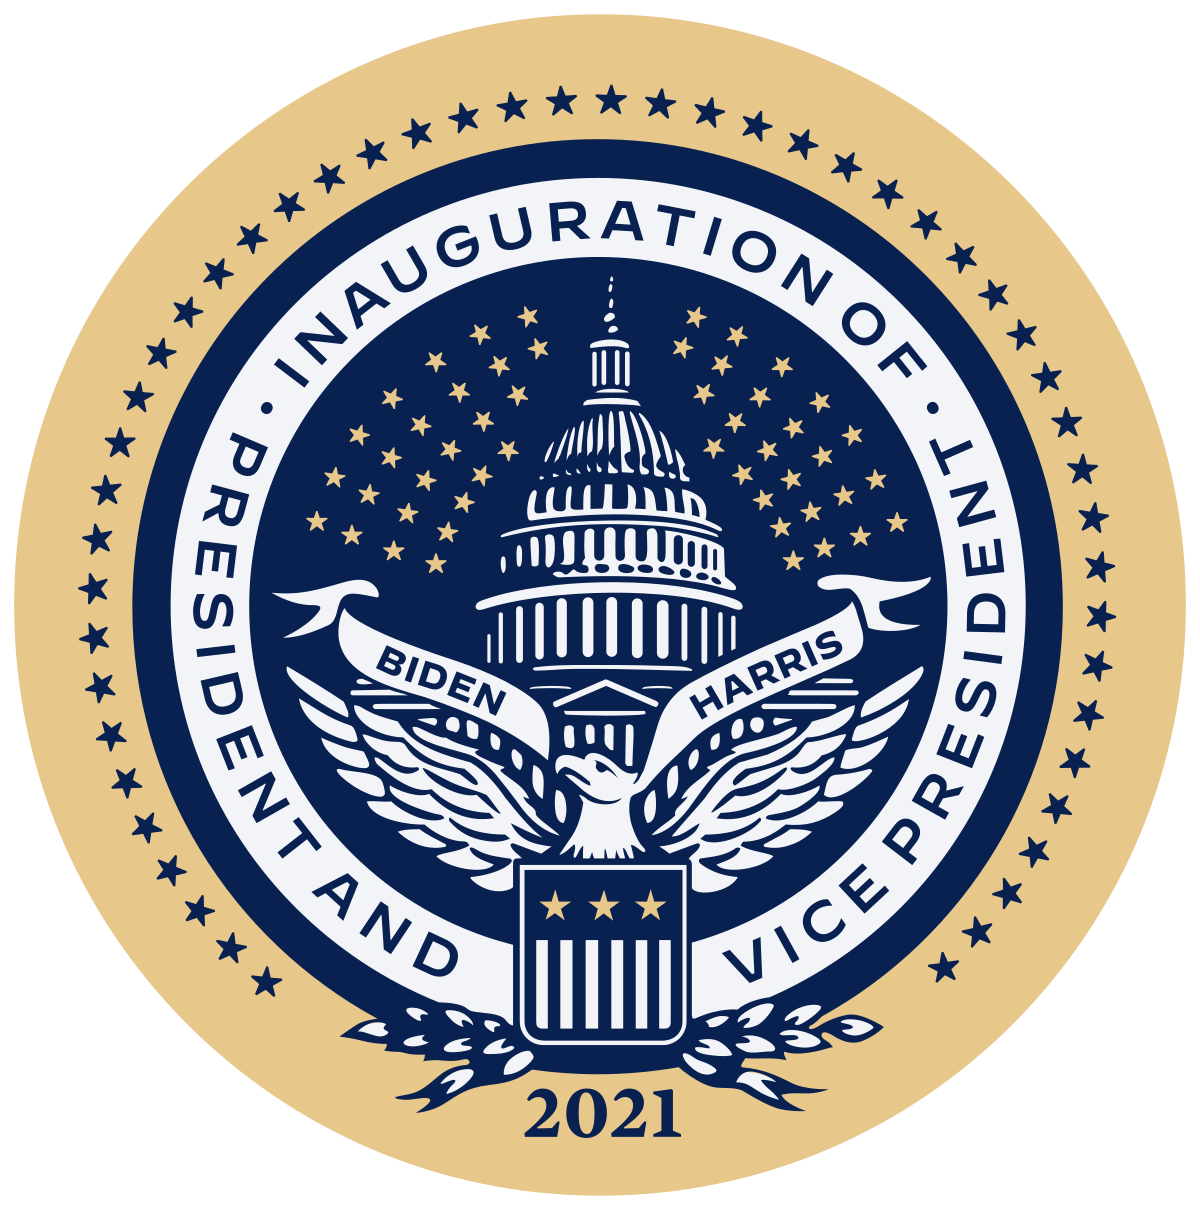 Inauguration of Joe Biden - Wikipedia